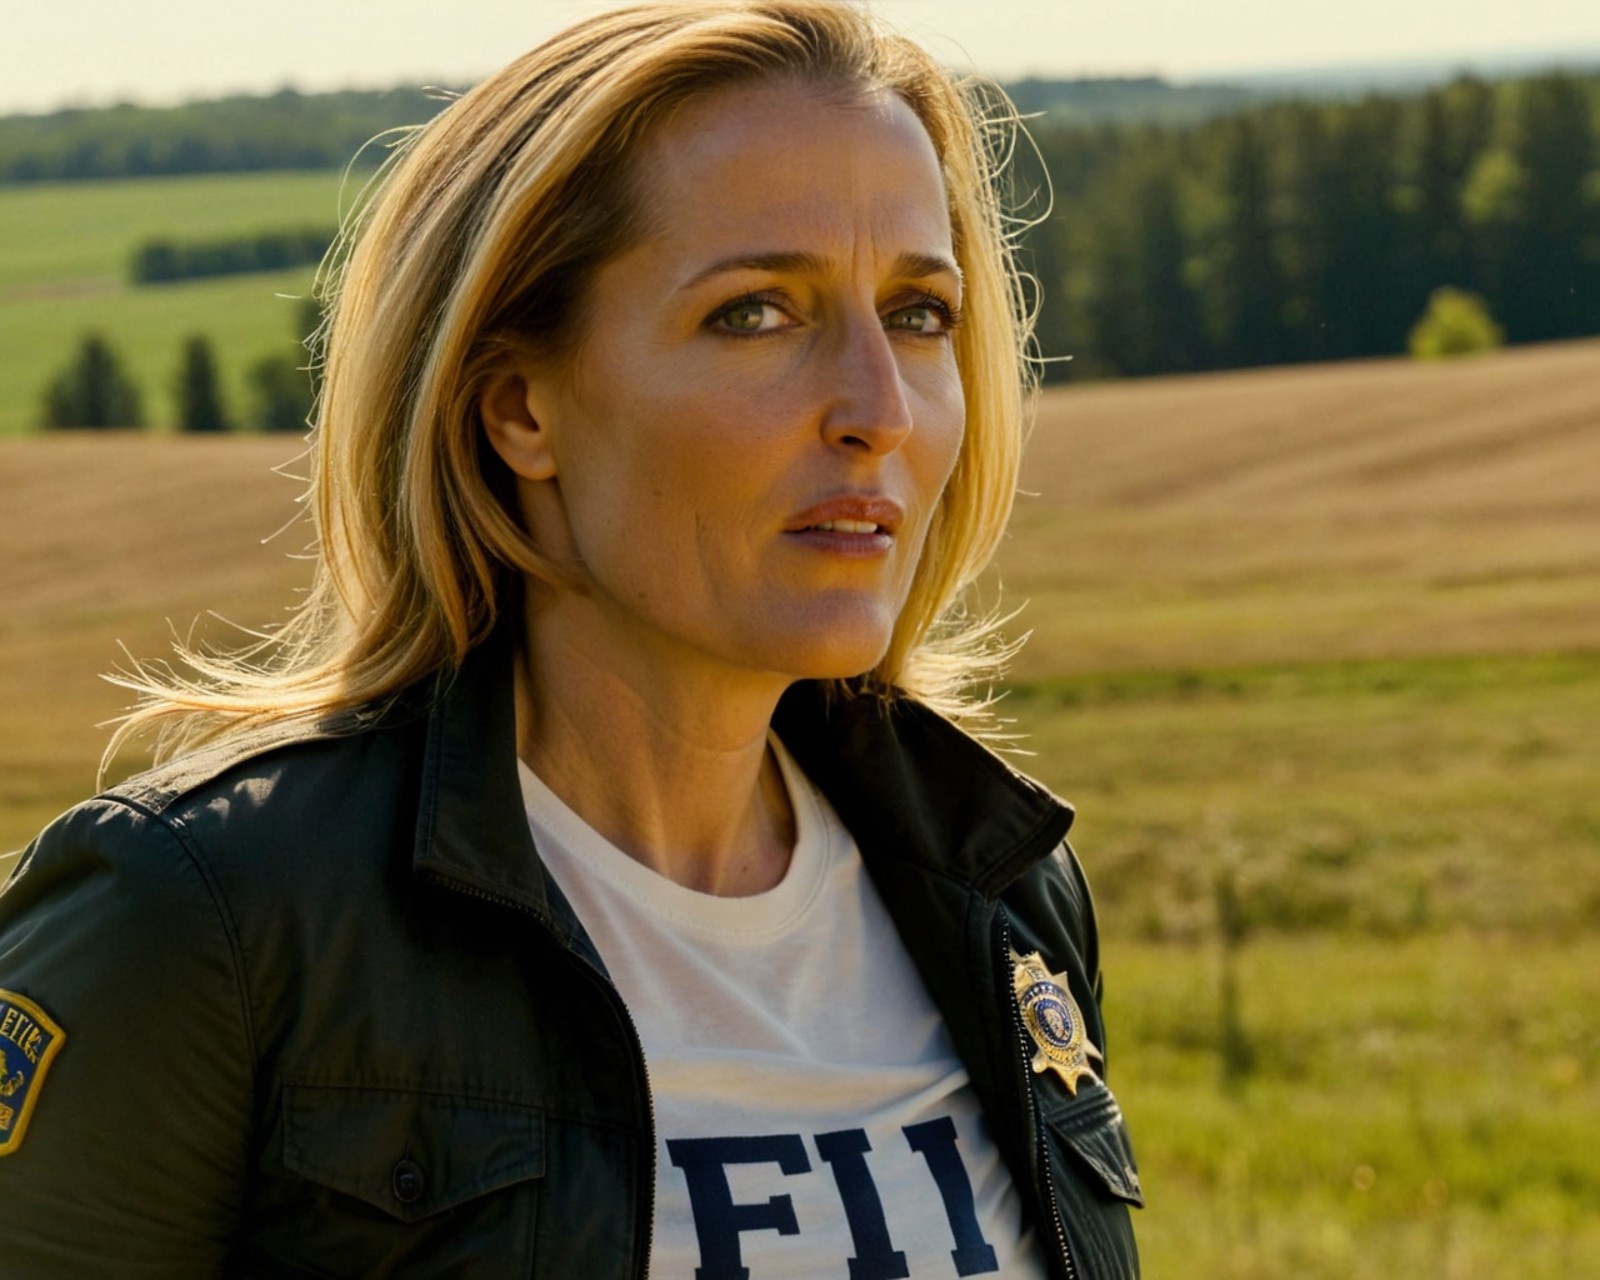 closeup photo shot of (gillianxx:1.2) as FBI agent, wearing a jacket with an FBI t-shirt, sunny day, few clouds, natural l...